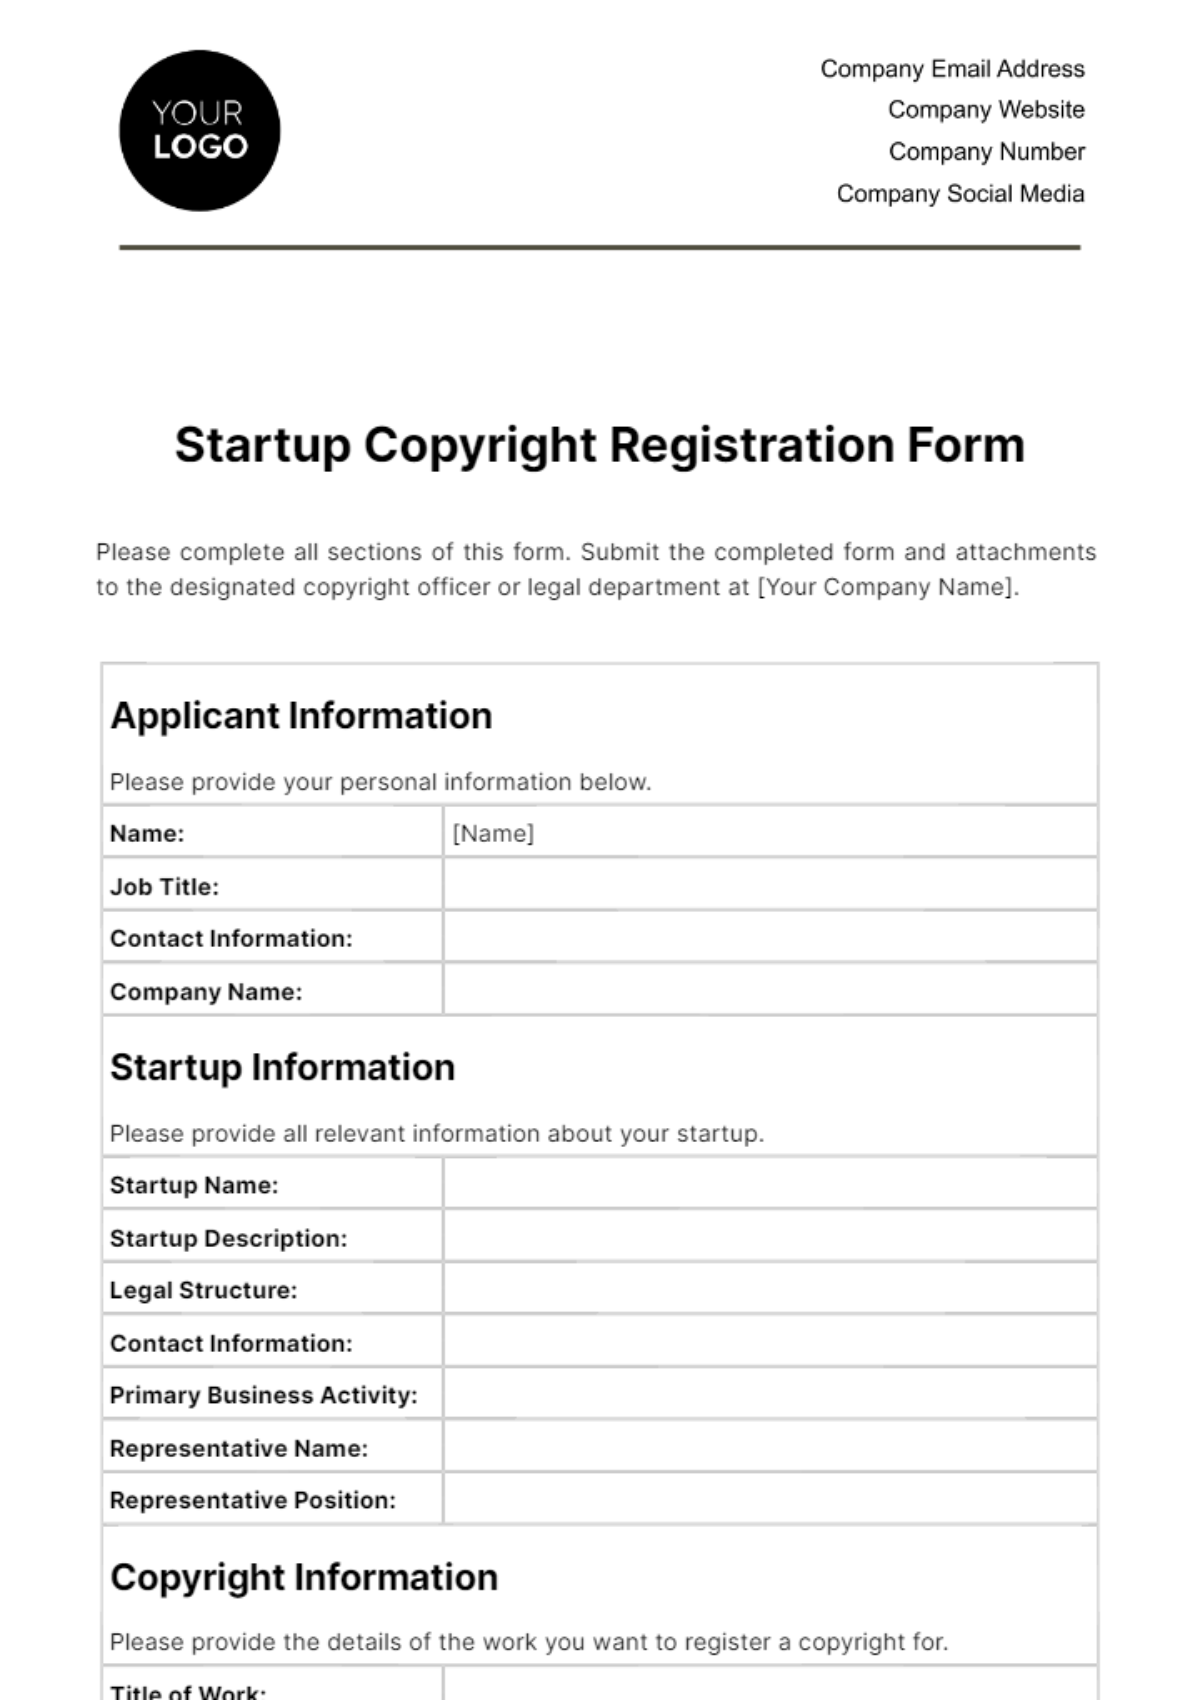 Free Startup Copyright Registration Form Template